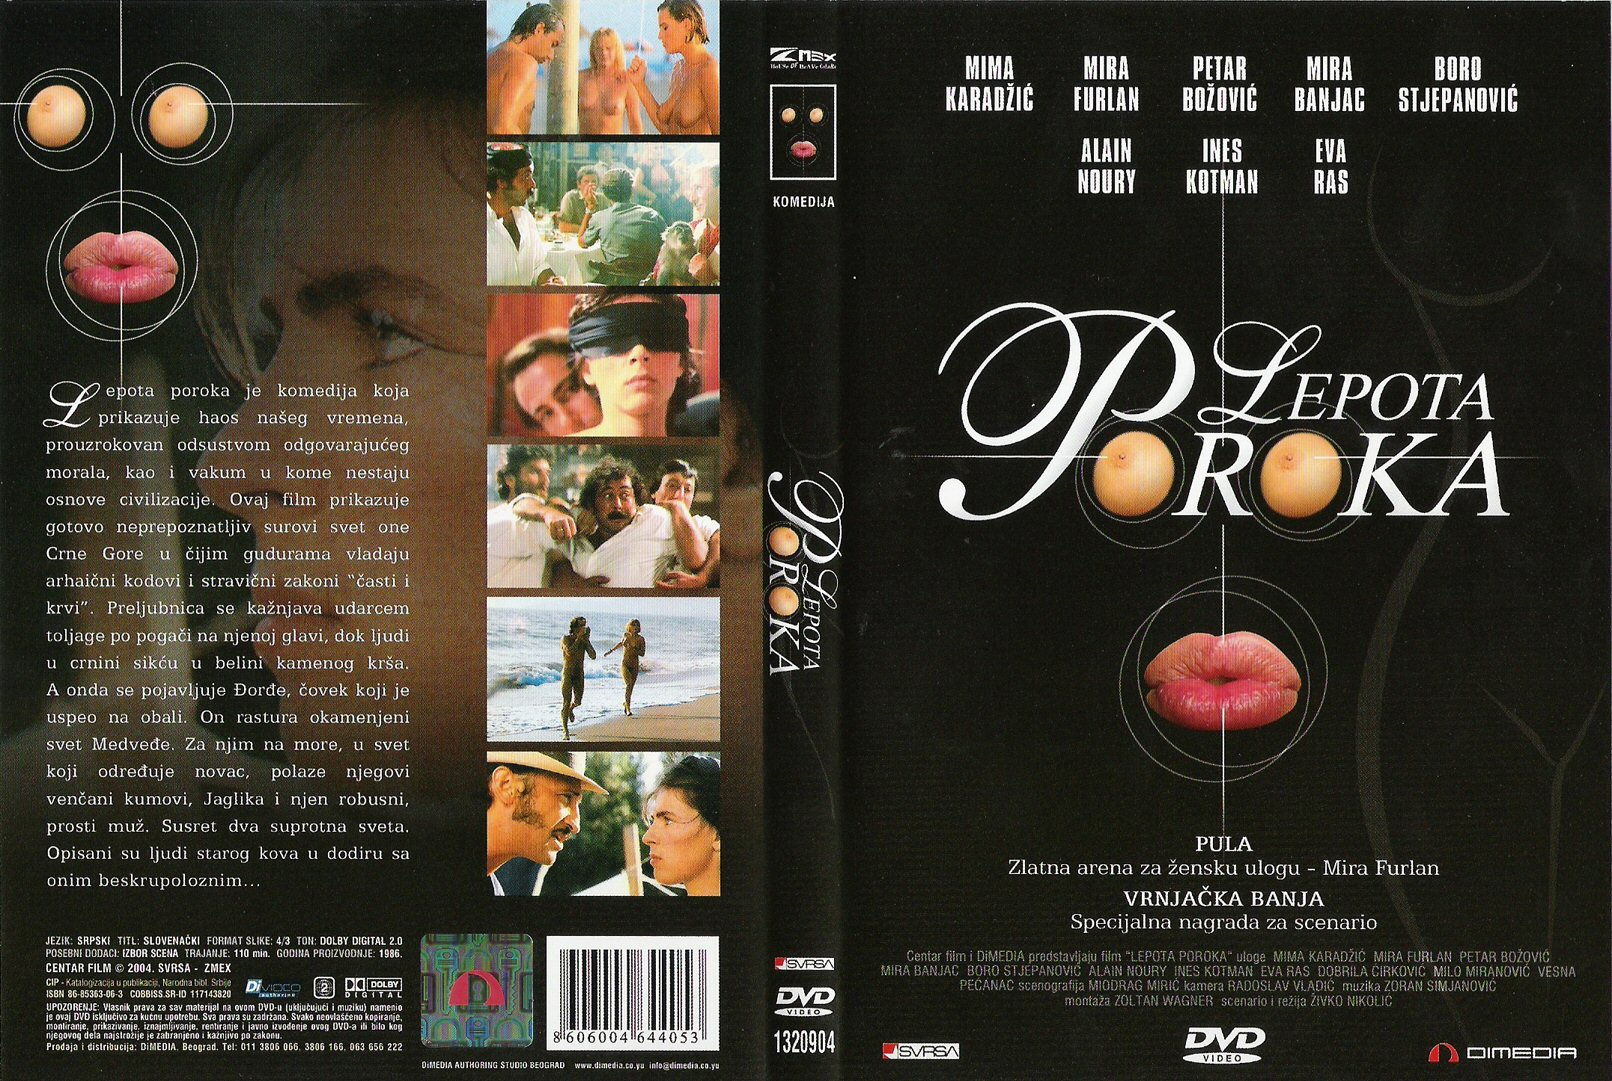 Click to view full size image -  DVD Cover - L - lepota_poroka_dvd - lepota_poroka_dvd.jpg